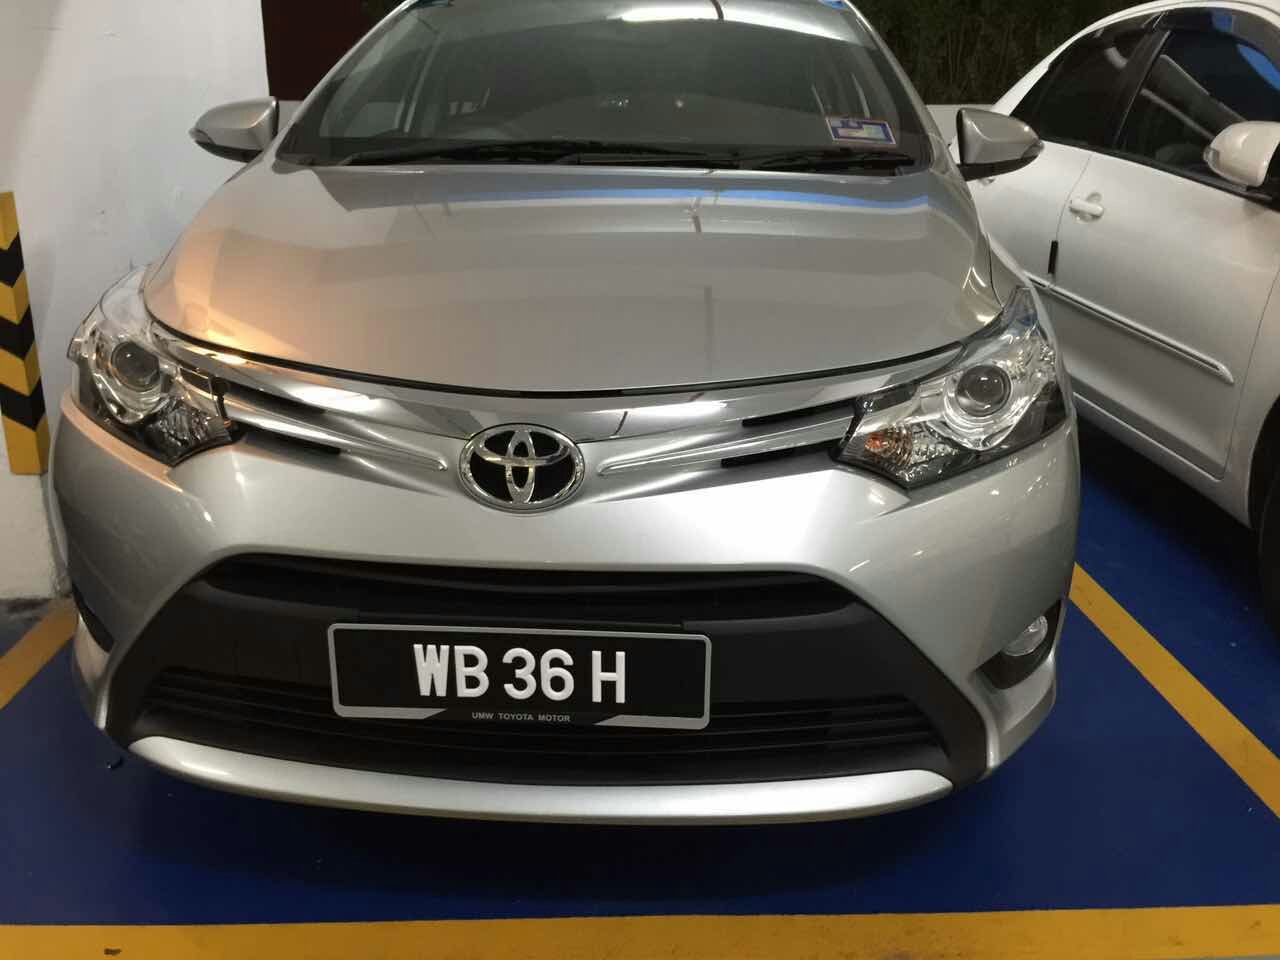 MalaysiaNumber - Malaysia Car Number Plate